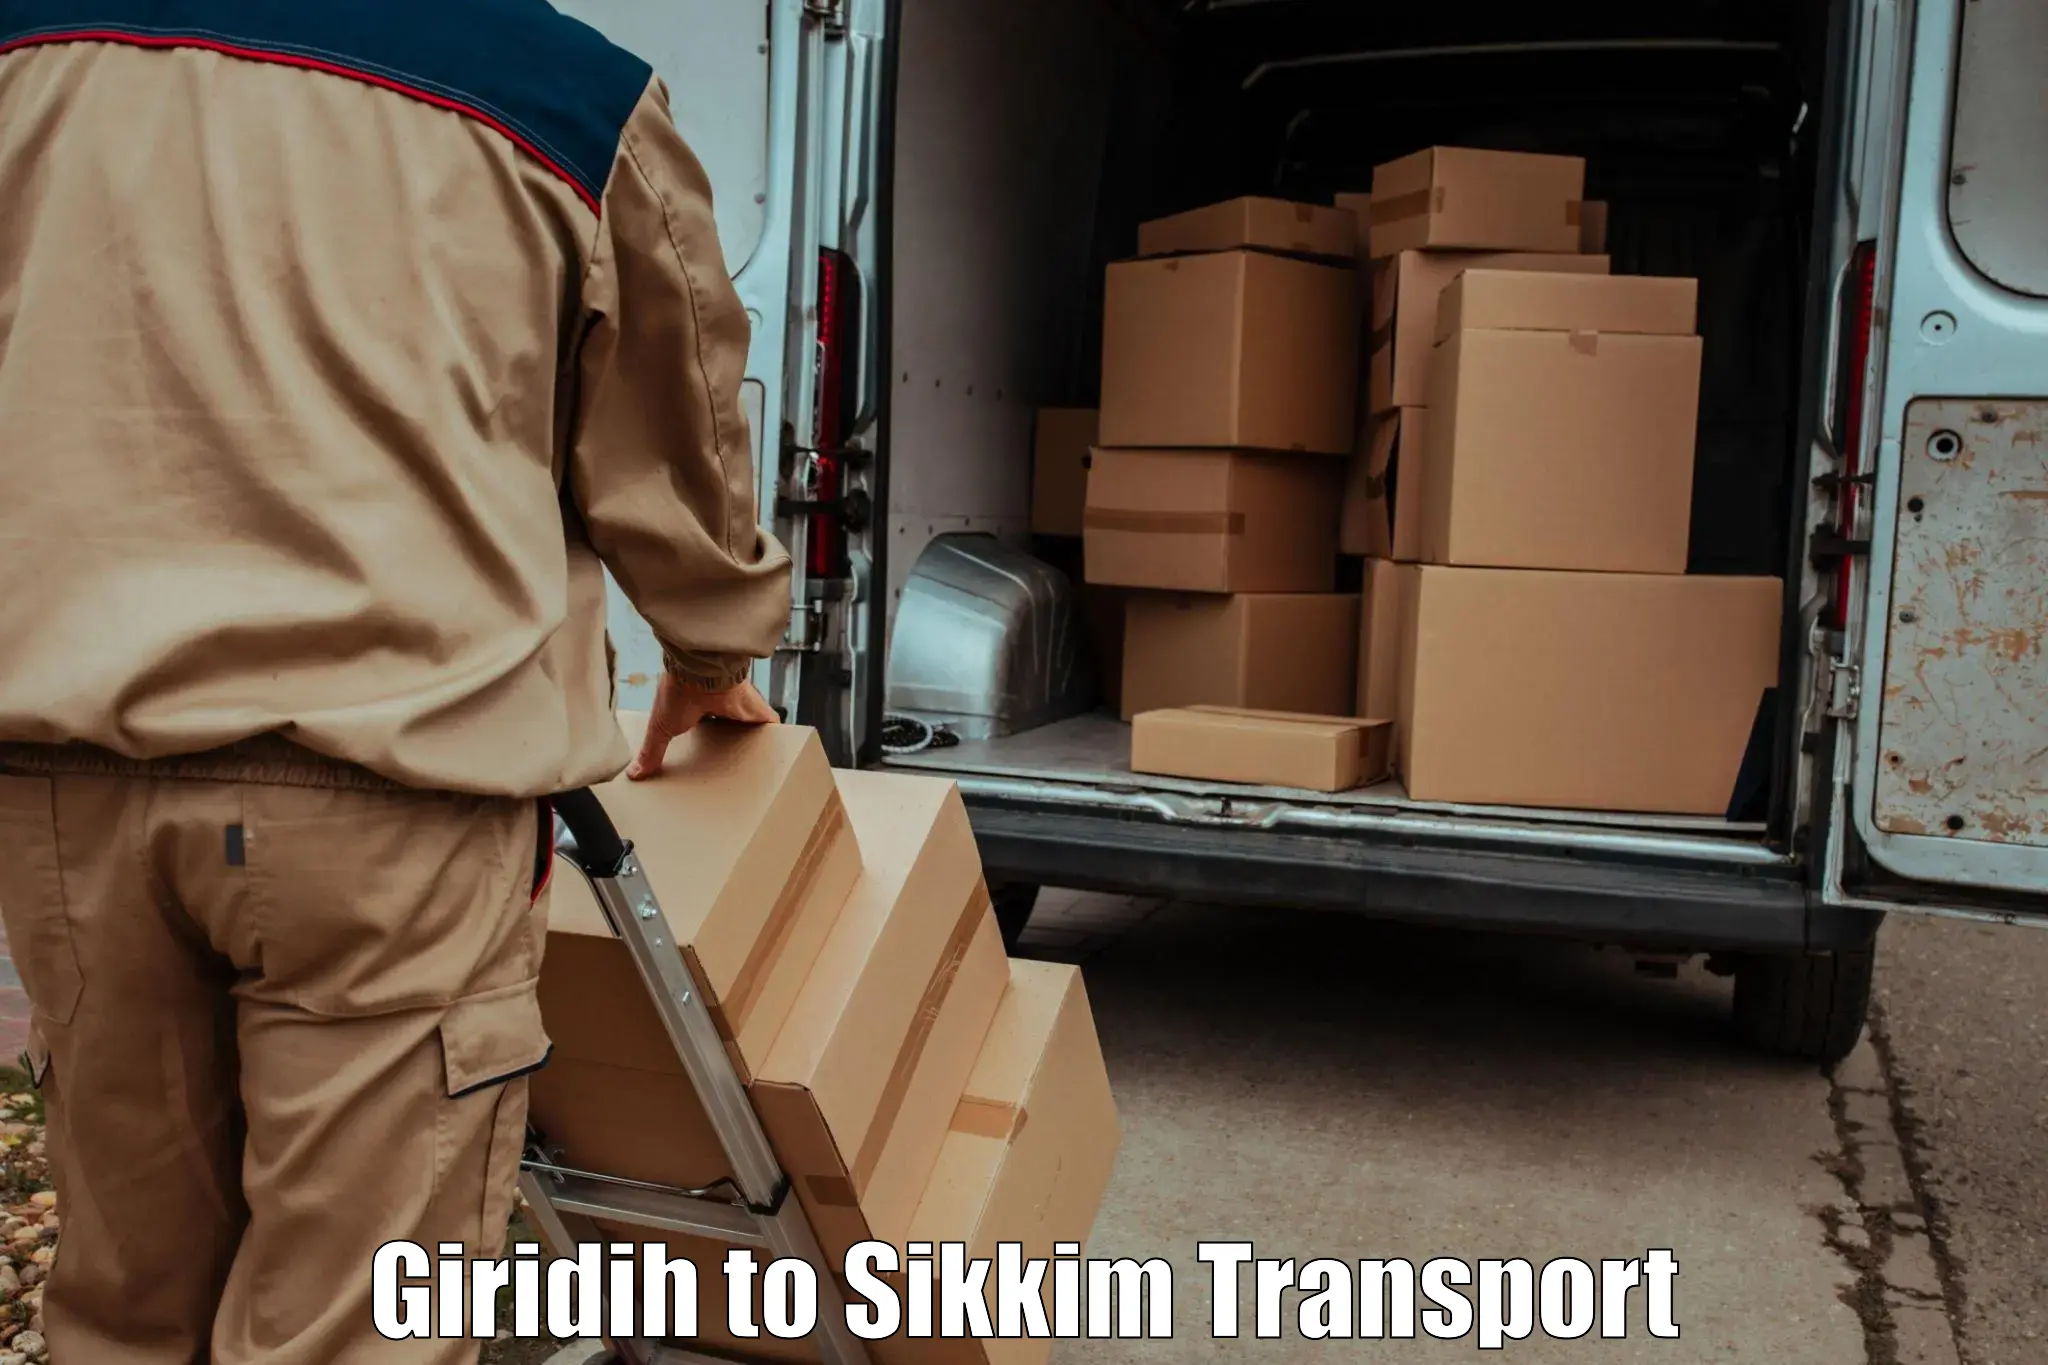 Online transport service Giridih to Sikkim